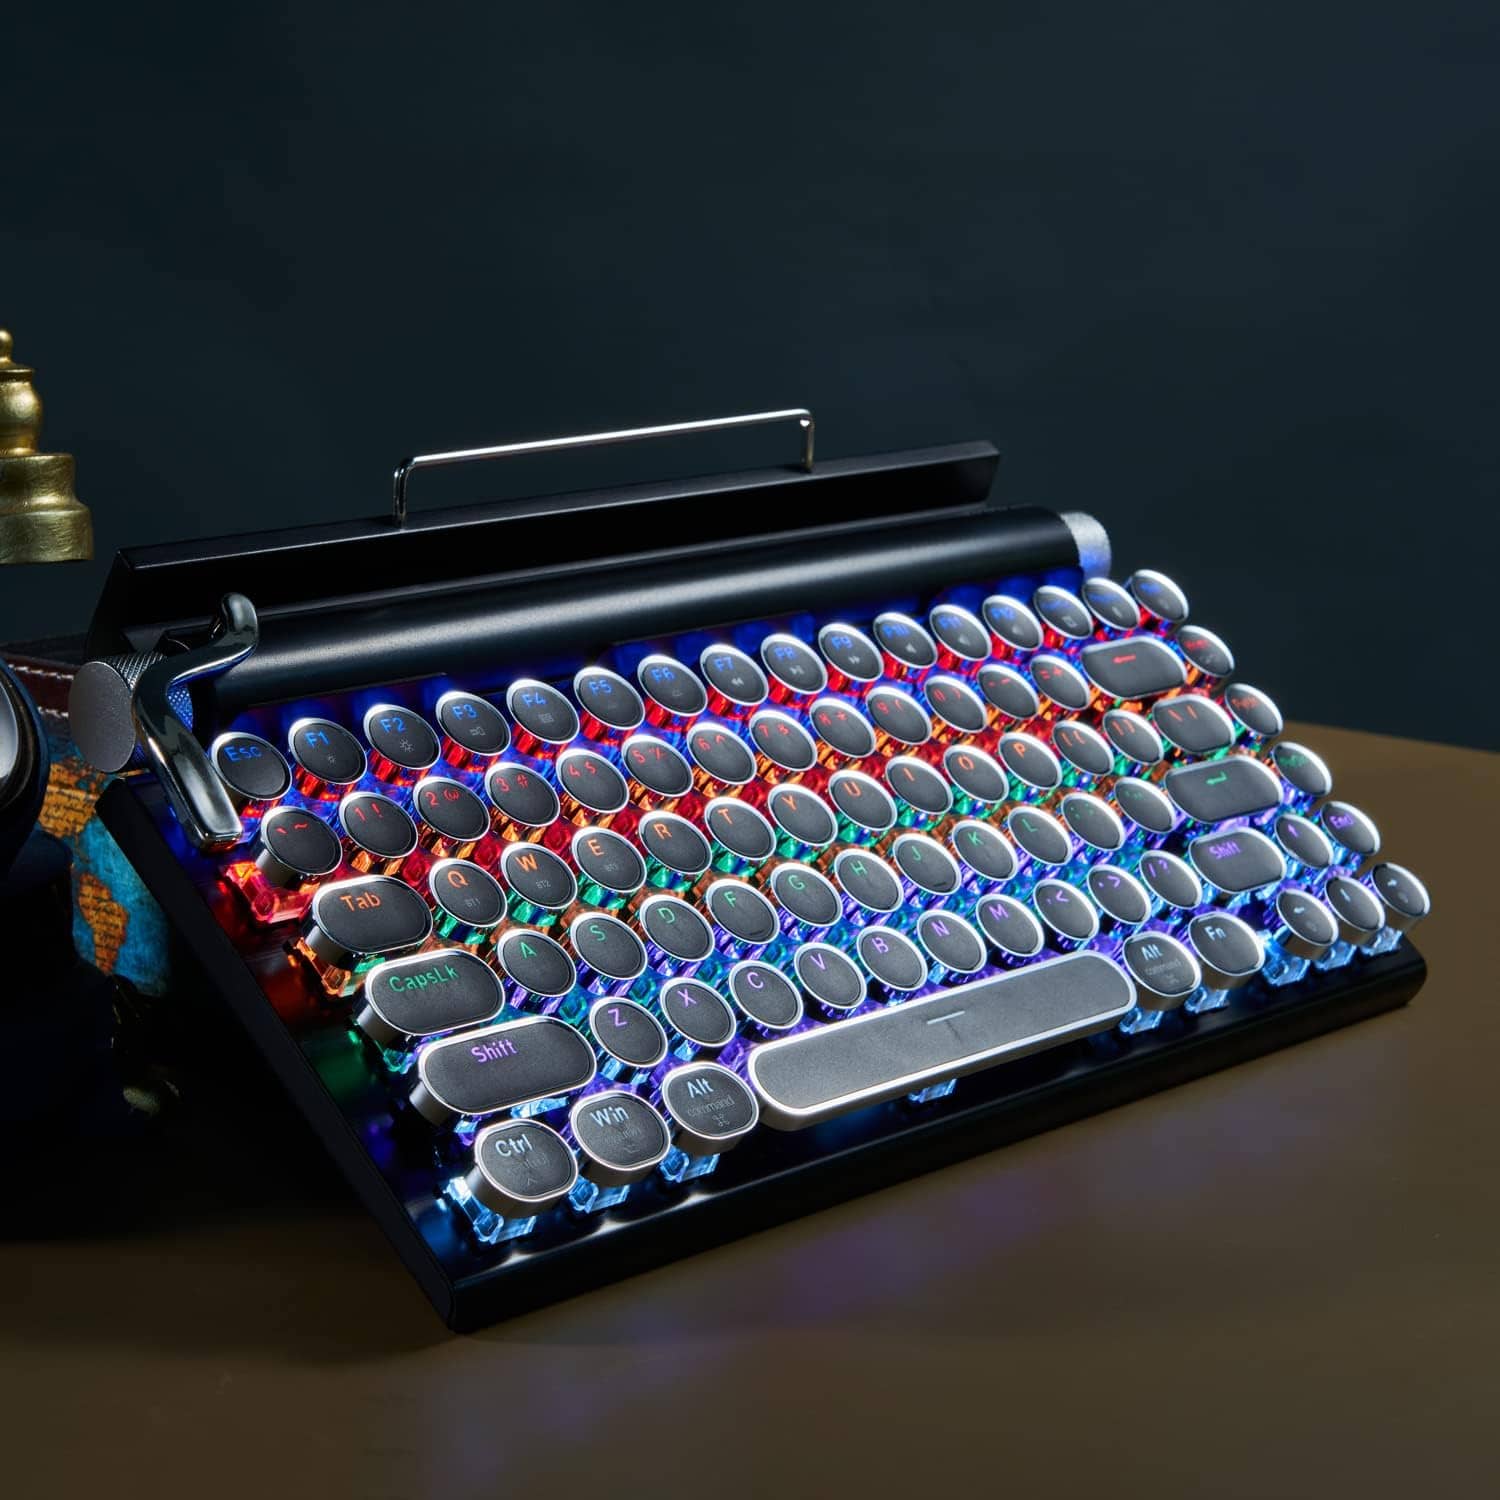 backlit-keyboard